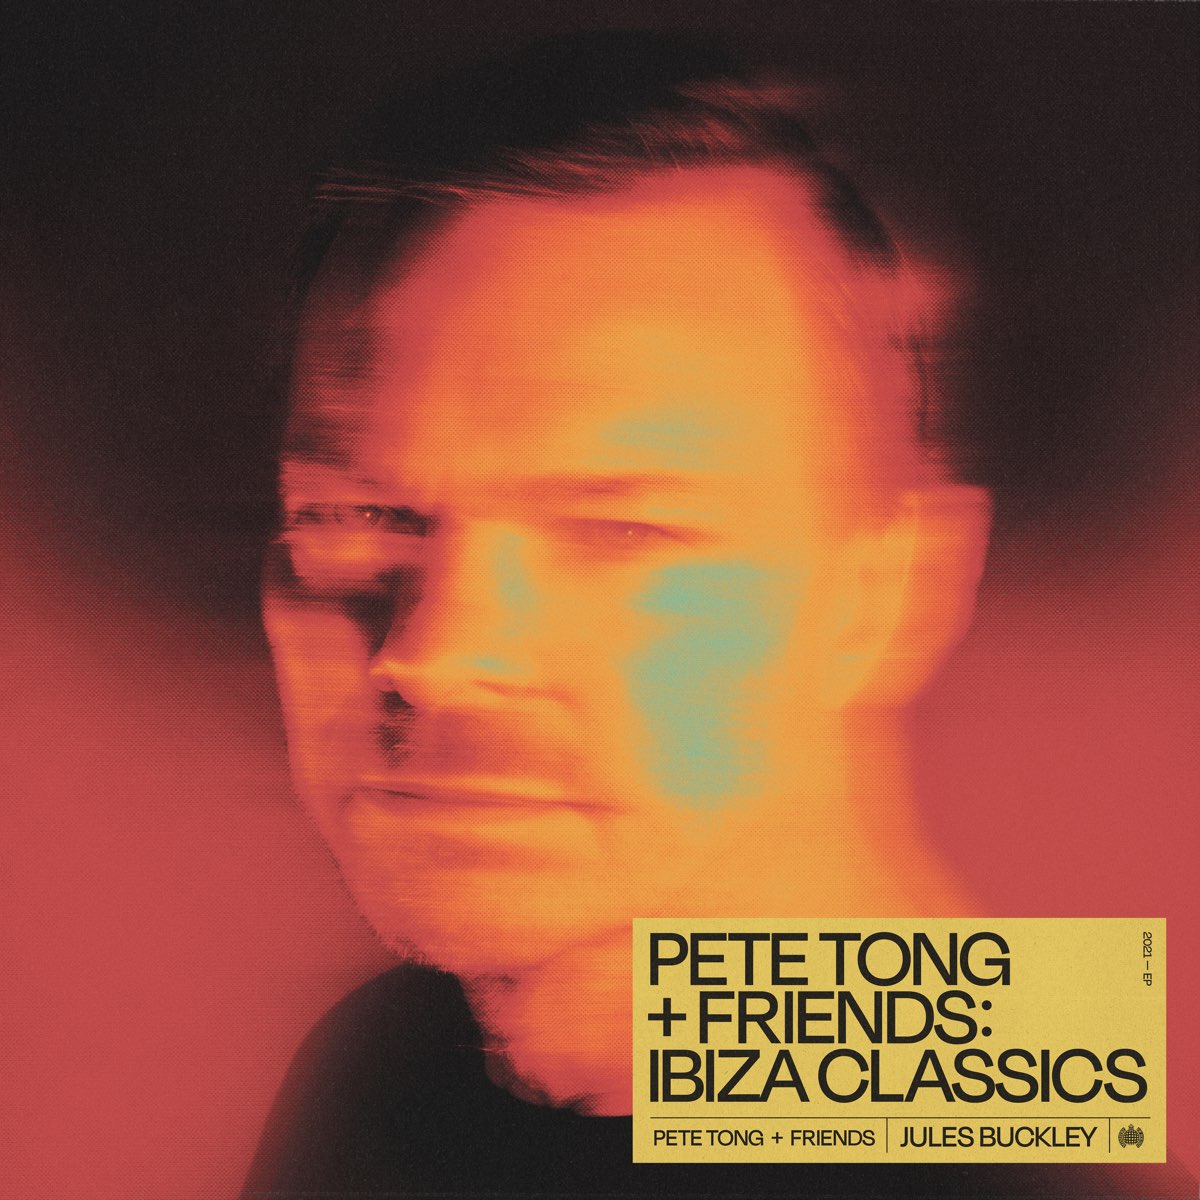 Pete Tong + Friends: Ibiza Classics - Album by Pete Tong - Apple Music